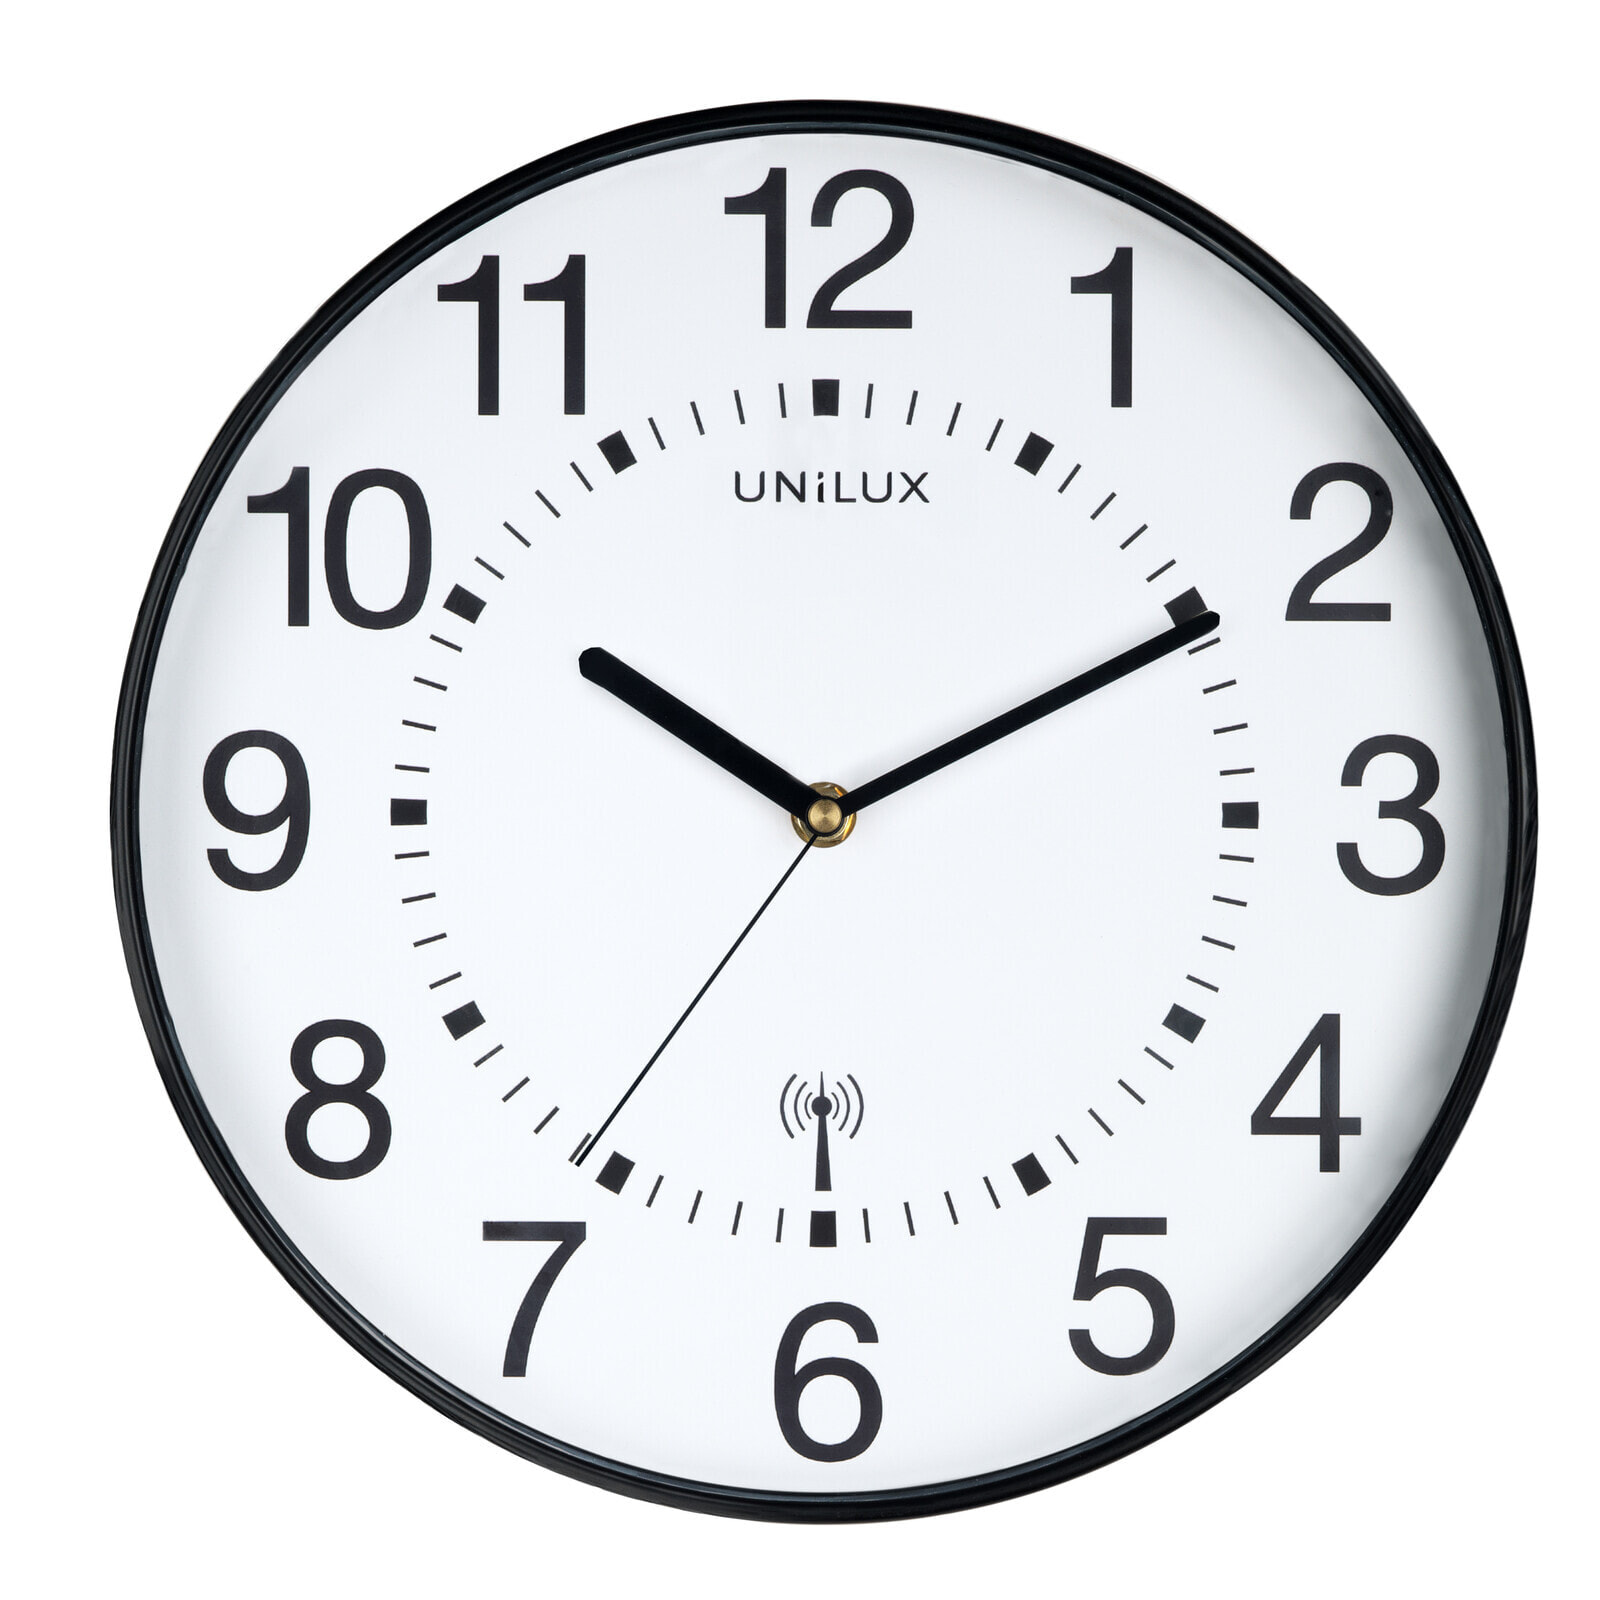 Unilux WAVE - Atomic wall clock - Round - Black - Acrylonitrile butadiene styrene (ABS) - Plastic - Glass - Classic